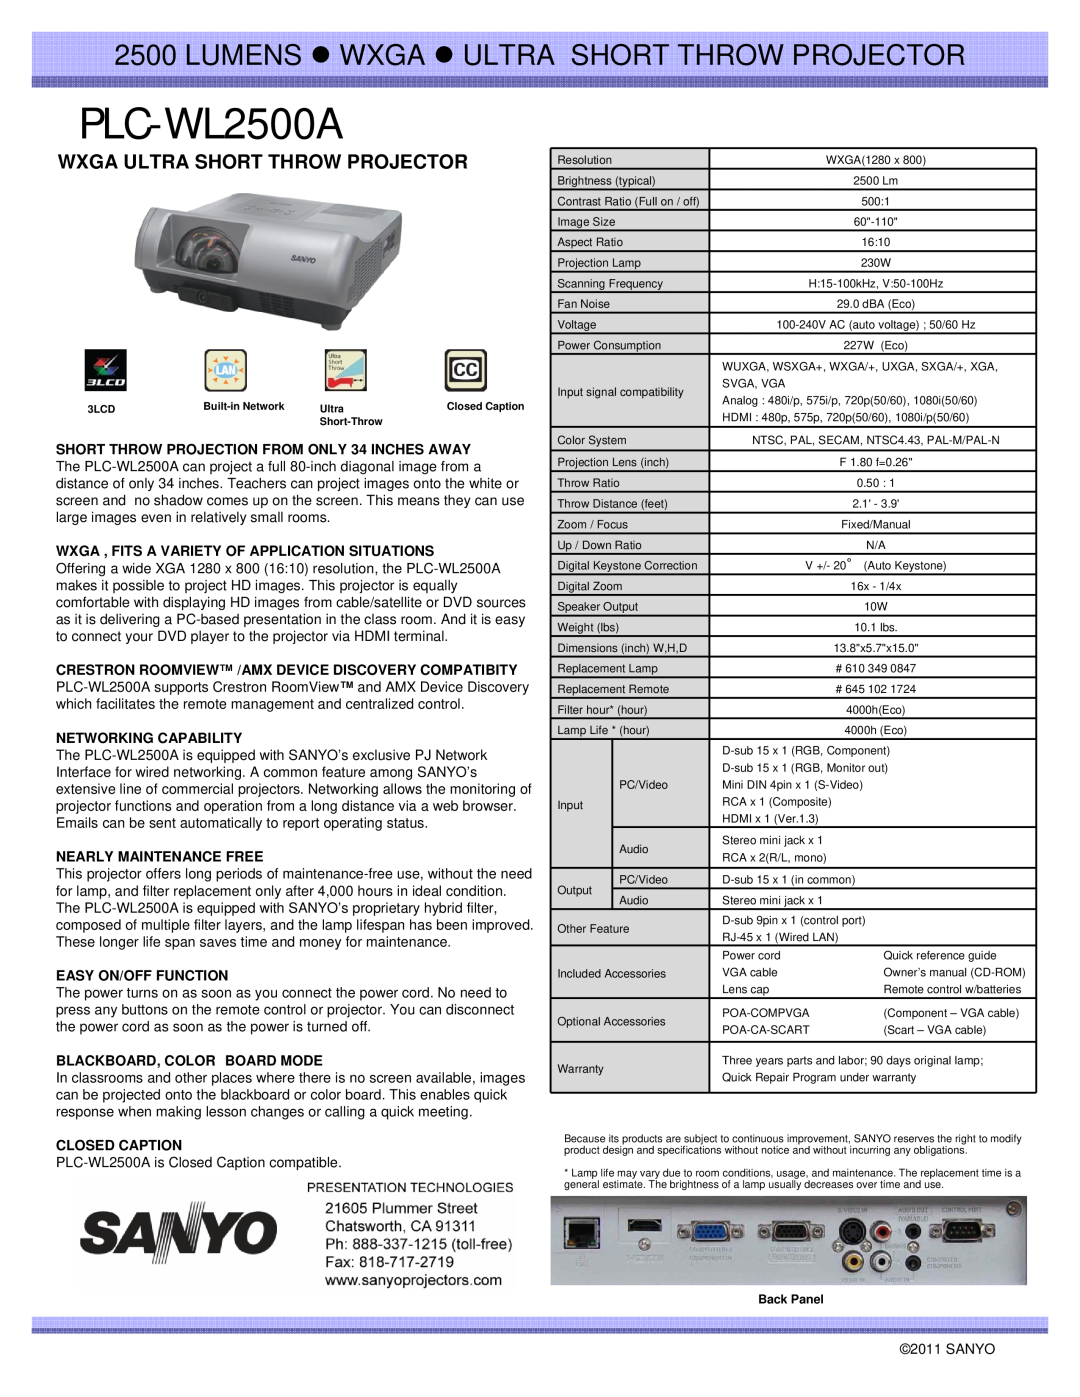 Sanyo PLC-WL2500A specifications LUMENS z WXGA z ULTRA SHORT THROW PROJECTOR, Wxga Ultra Short Throw Projector 